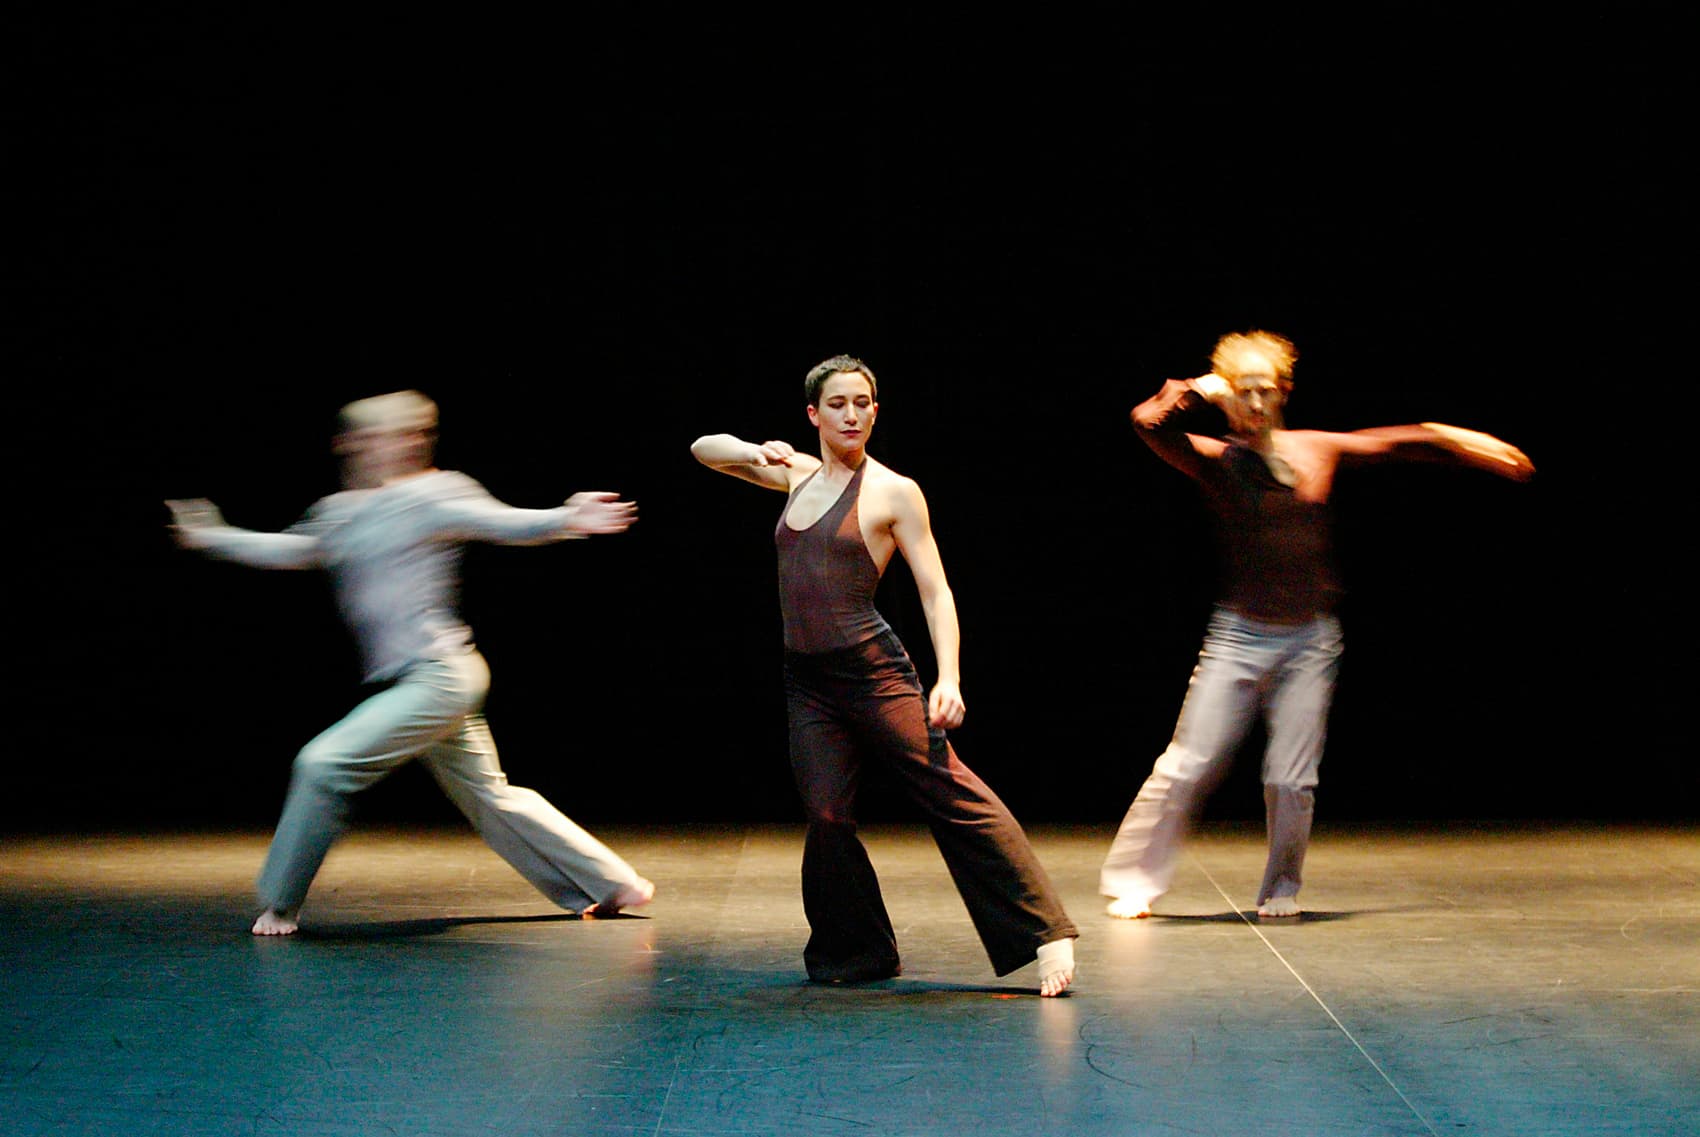 FIA Costa Rica: Dancers at the International Arts Festival